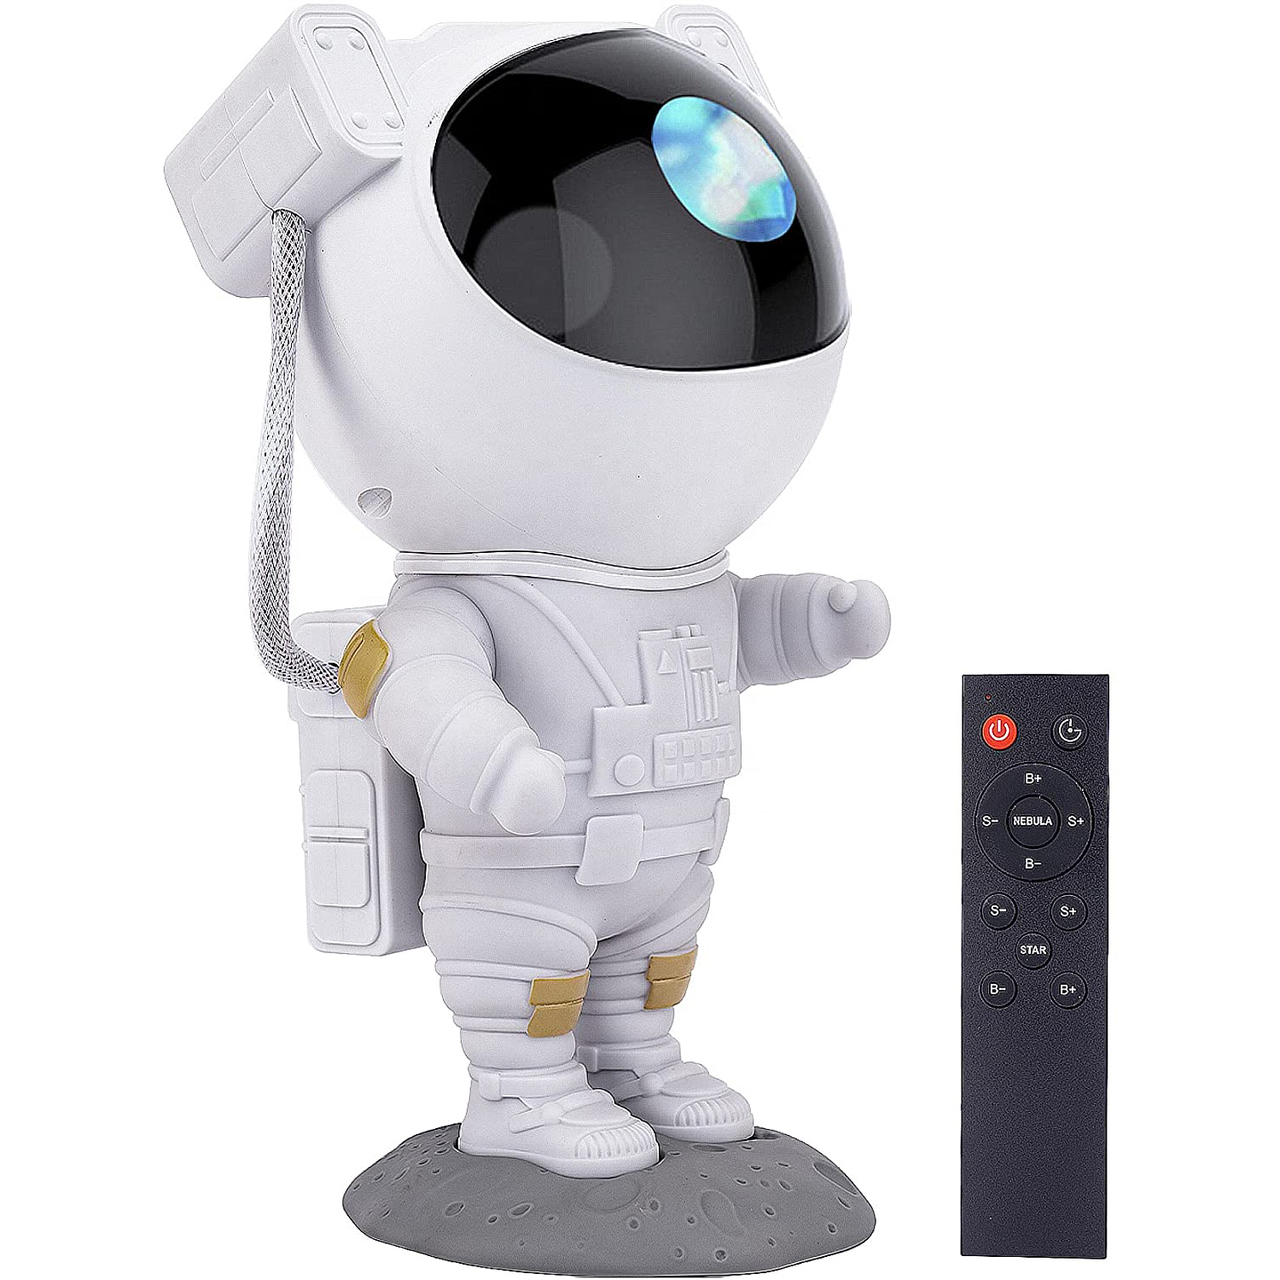 Astronaut Anime Galaxy Starry Sky Projector - FIHEROE.